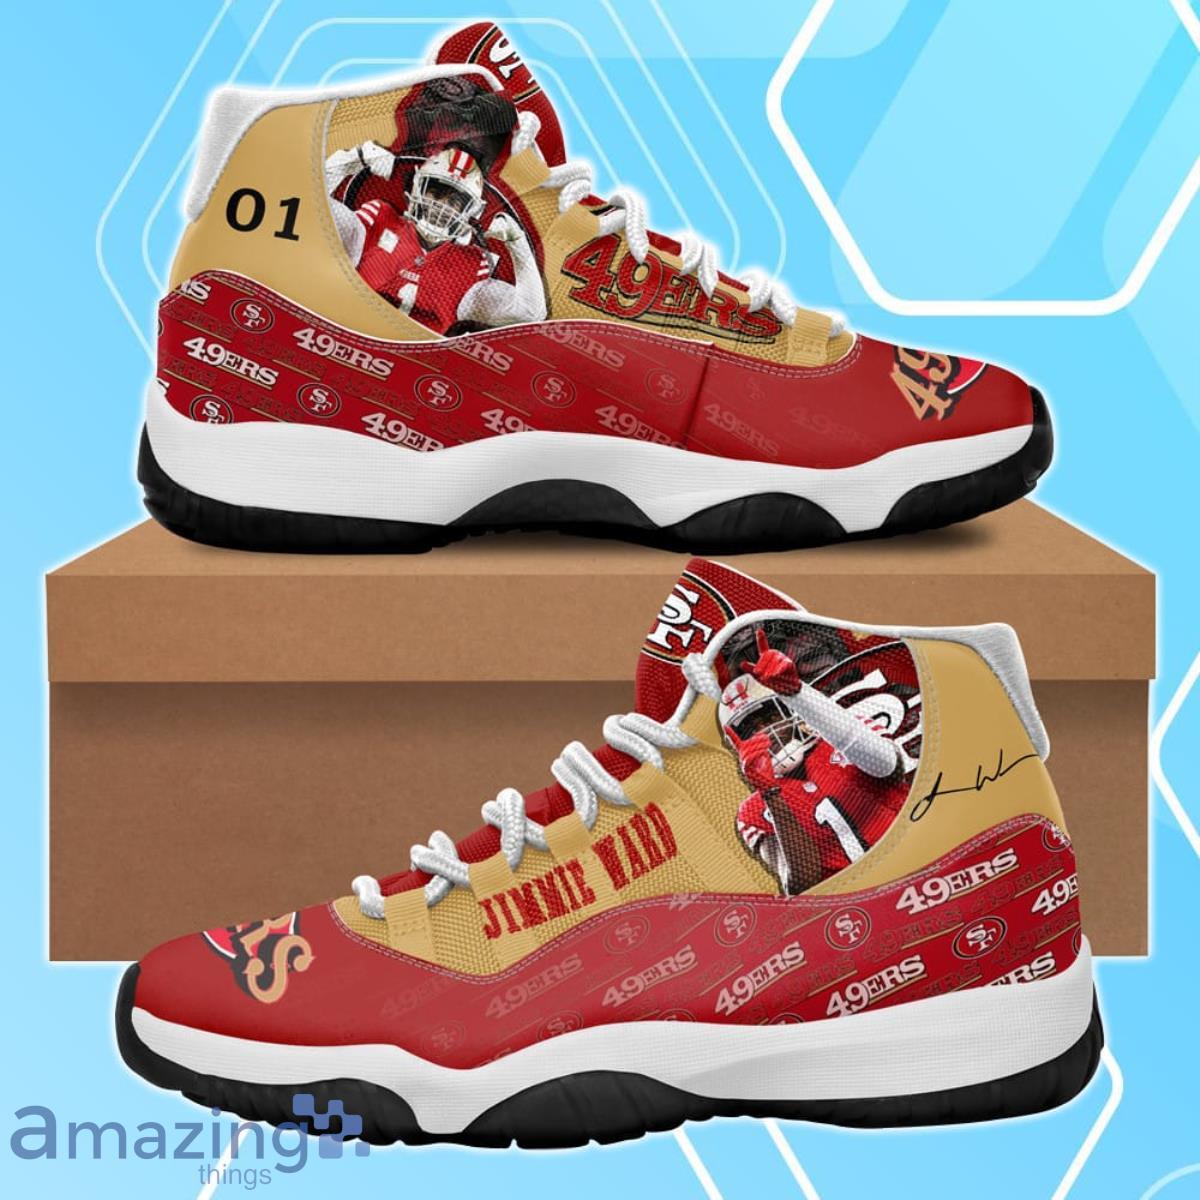 San Francisco 49ers Jimmie Ward Air Jordan 11 Shoes For Men Women Product Photo 1